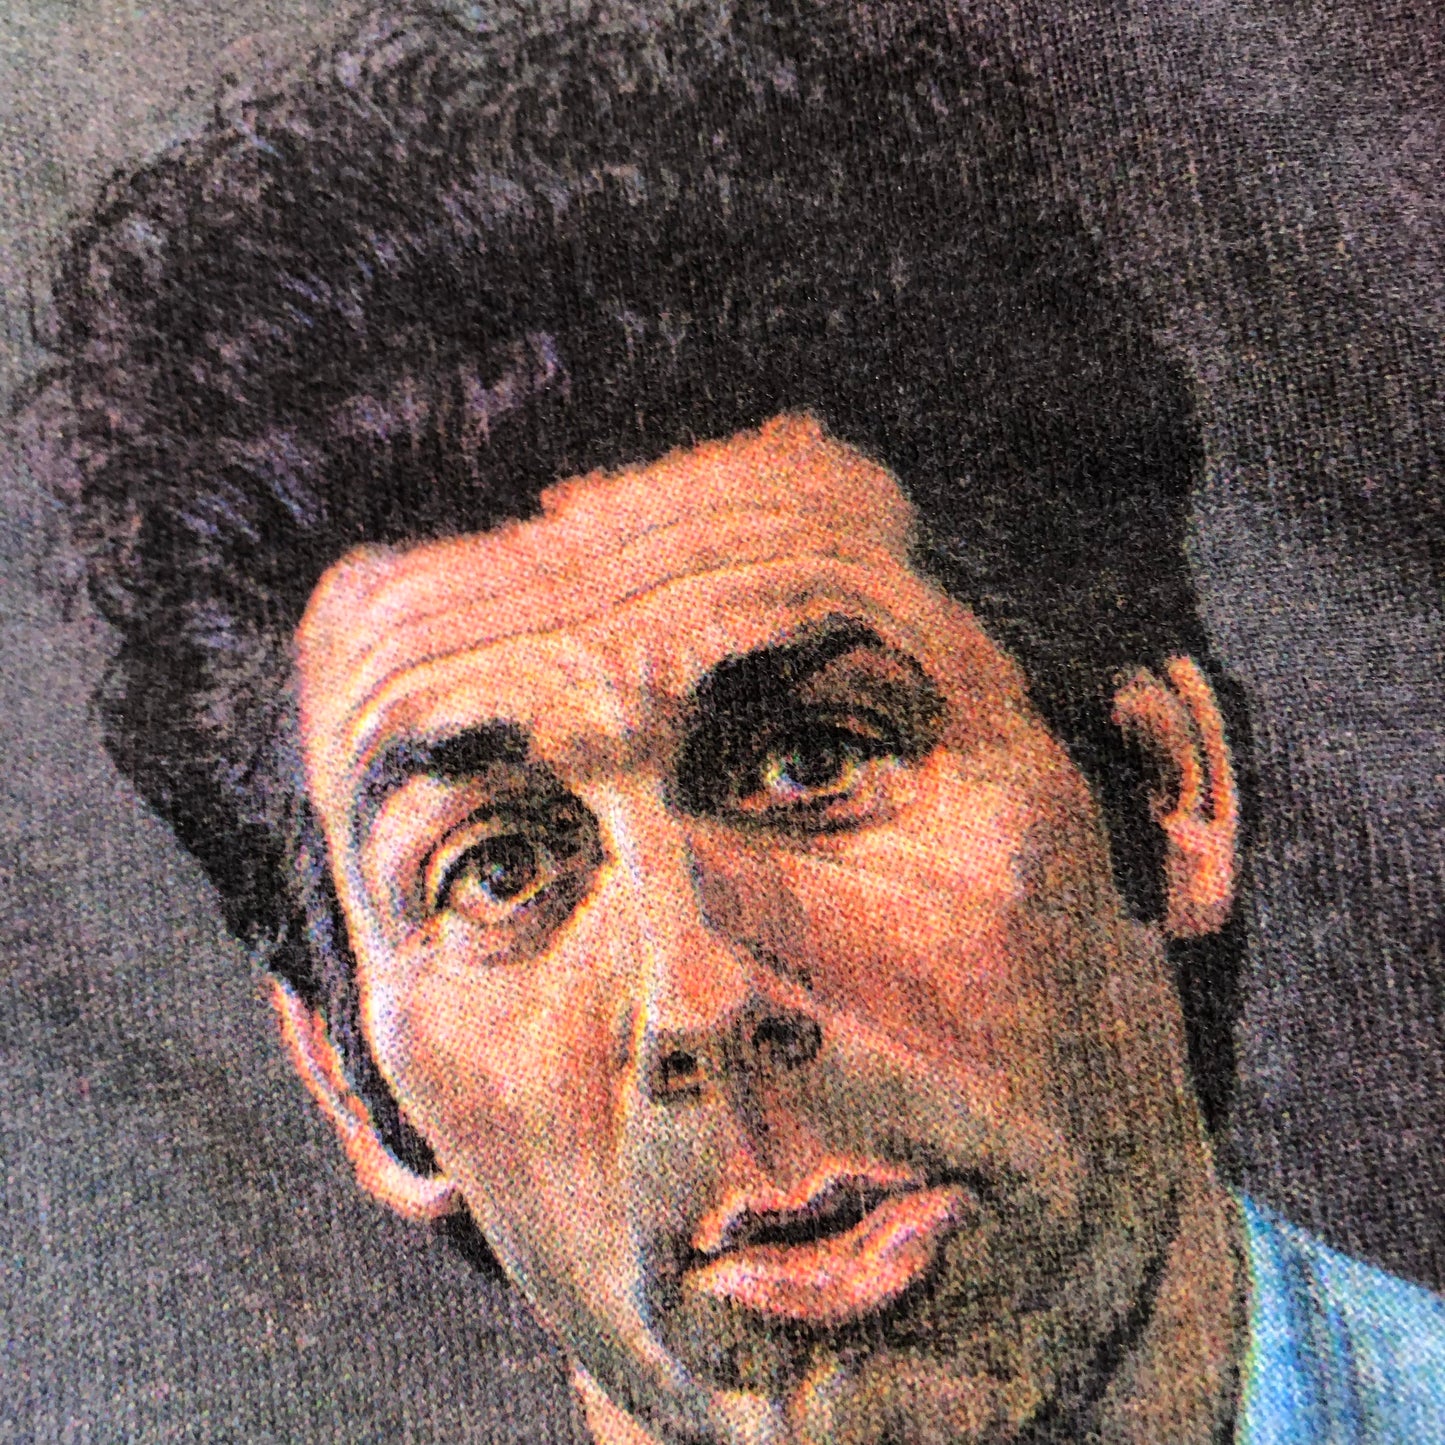 1993 Seinfeld "The Kramer" Shirt - M